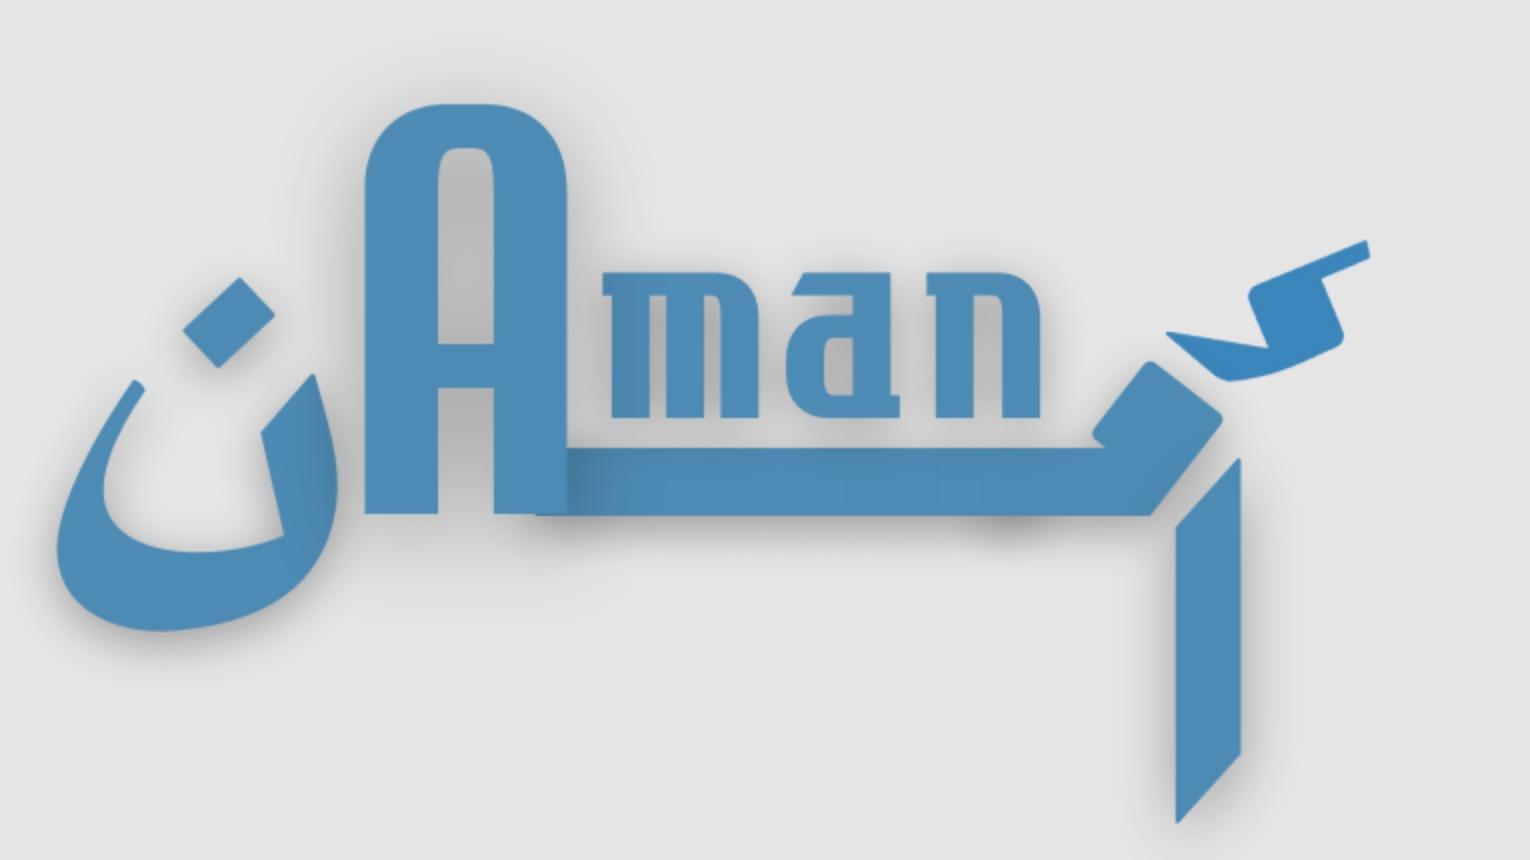 Aman Human resource solutions